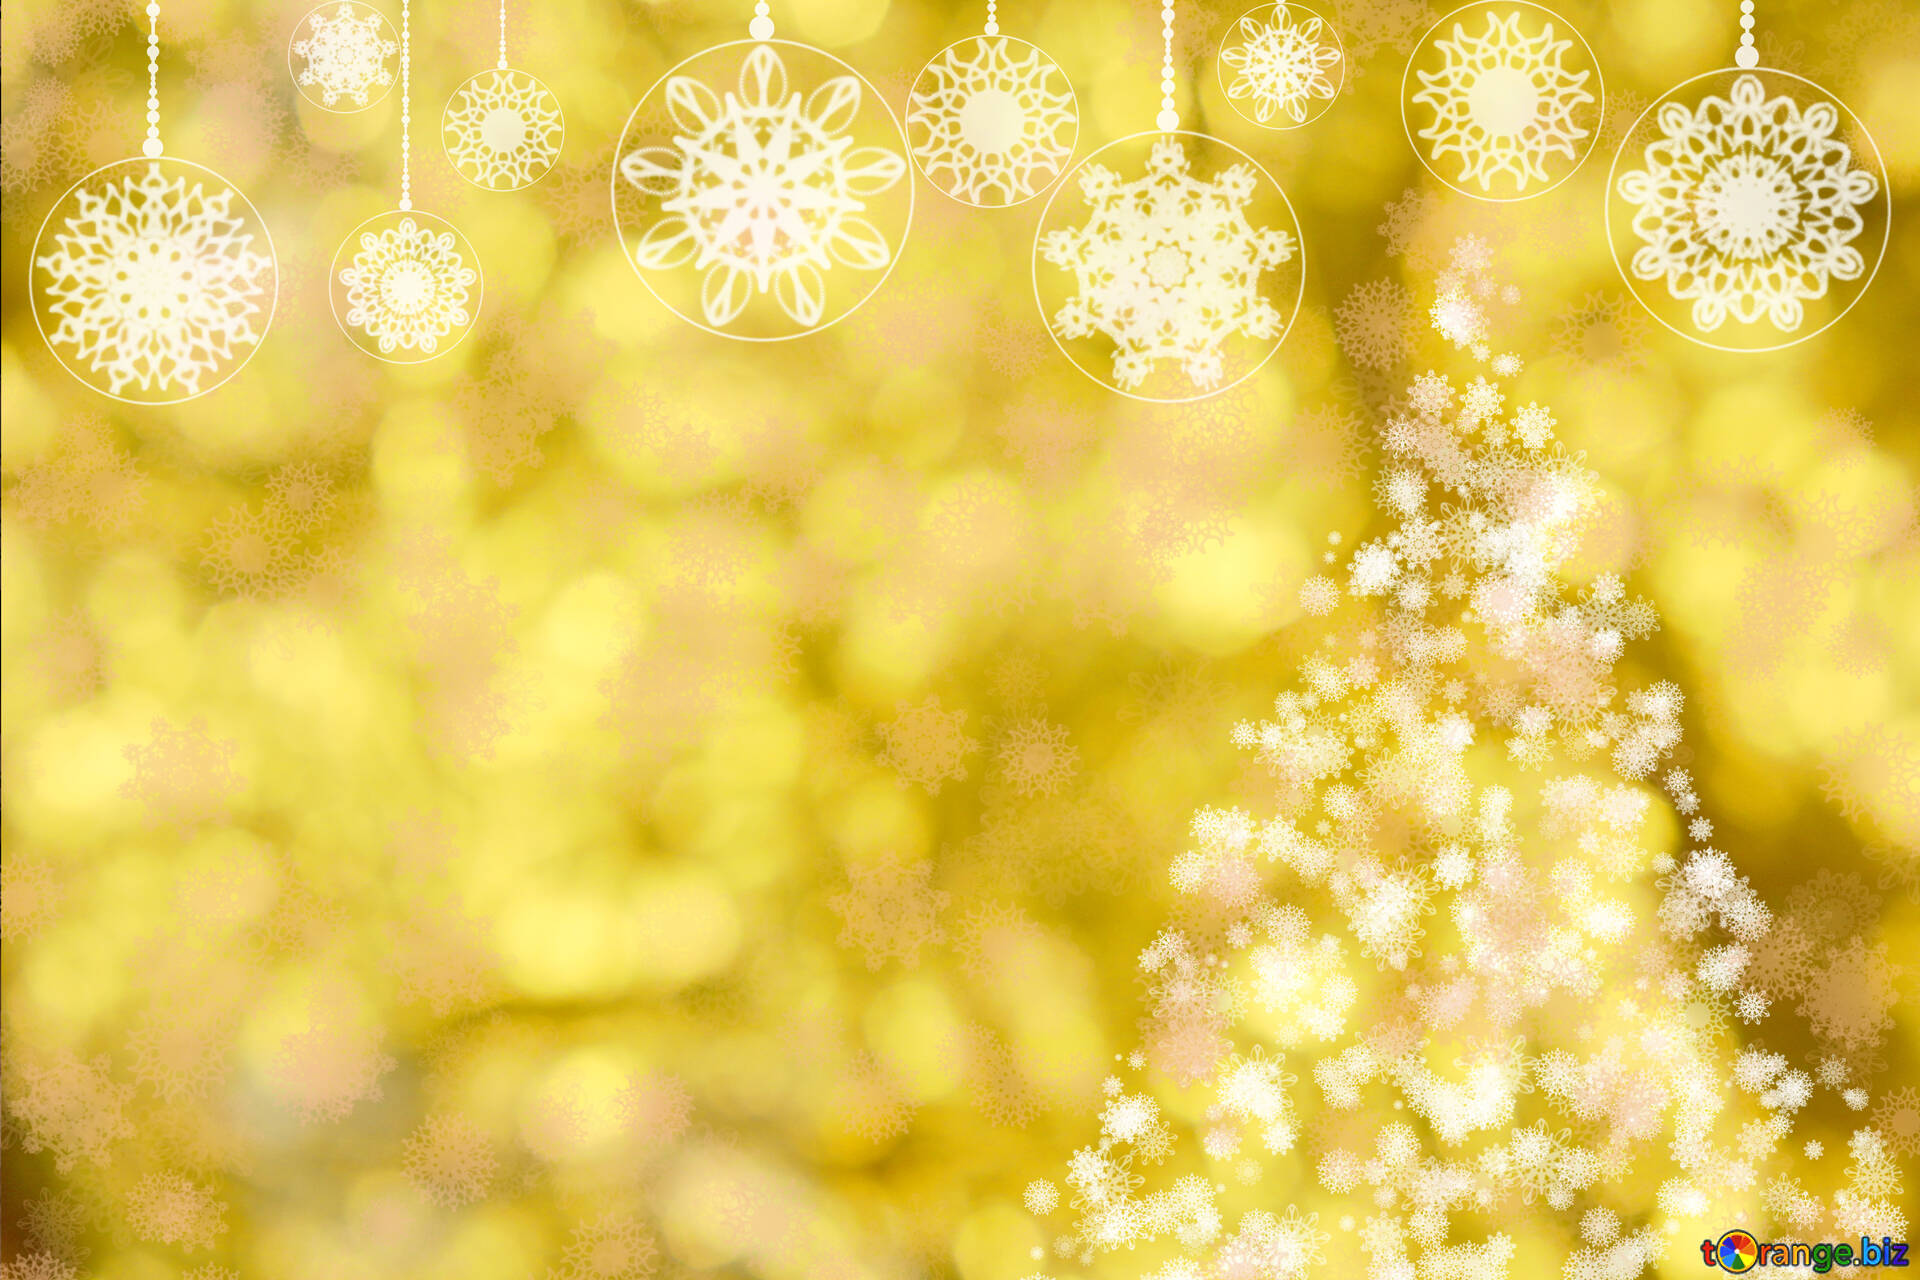 New year golden background free image - № 40684